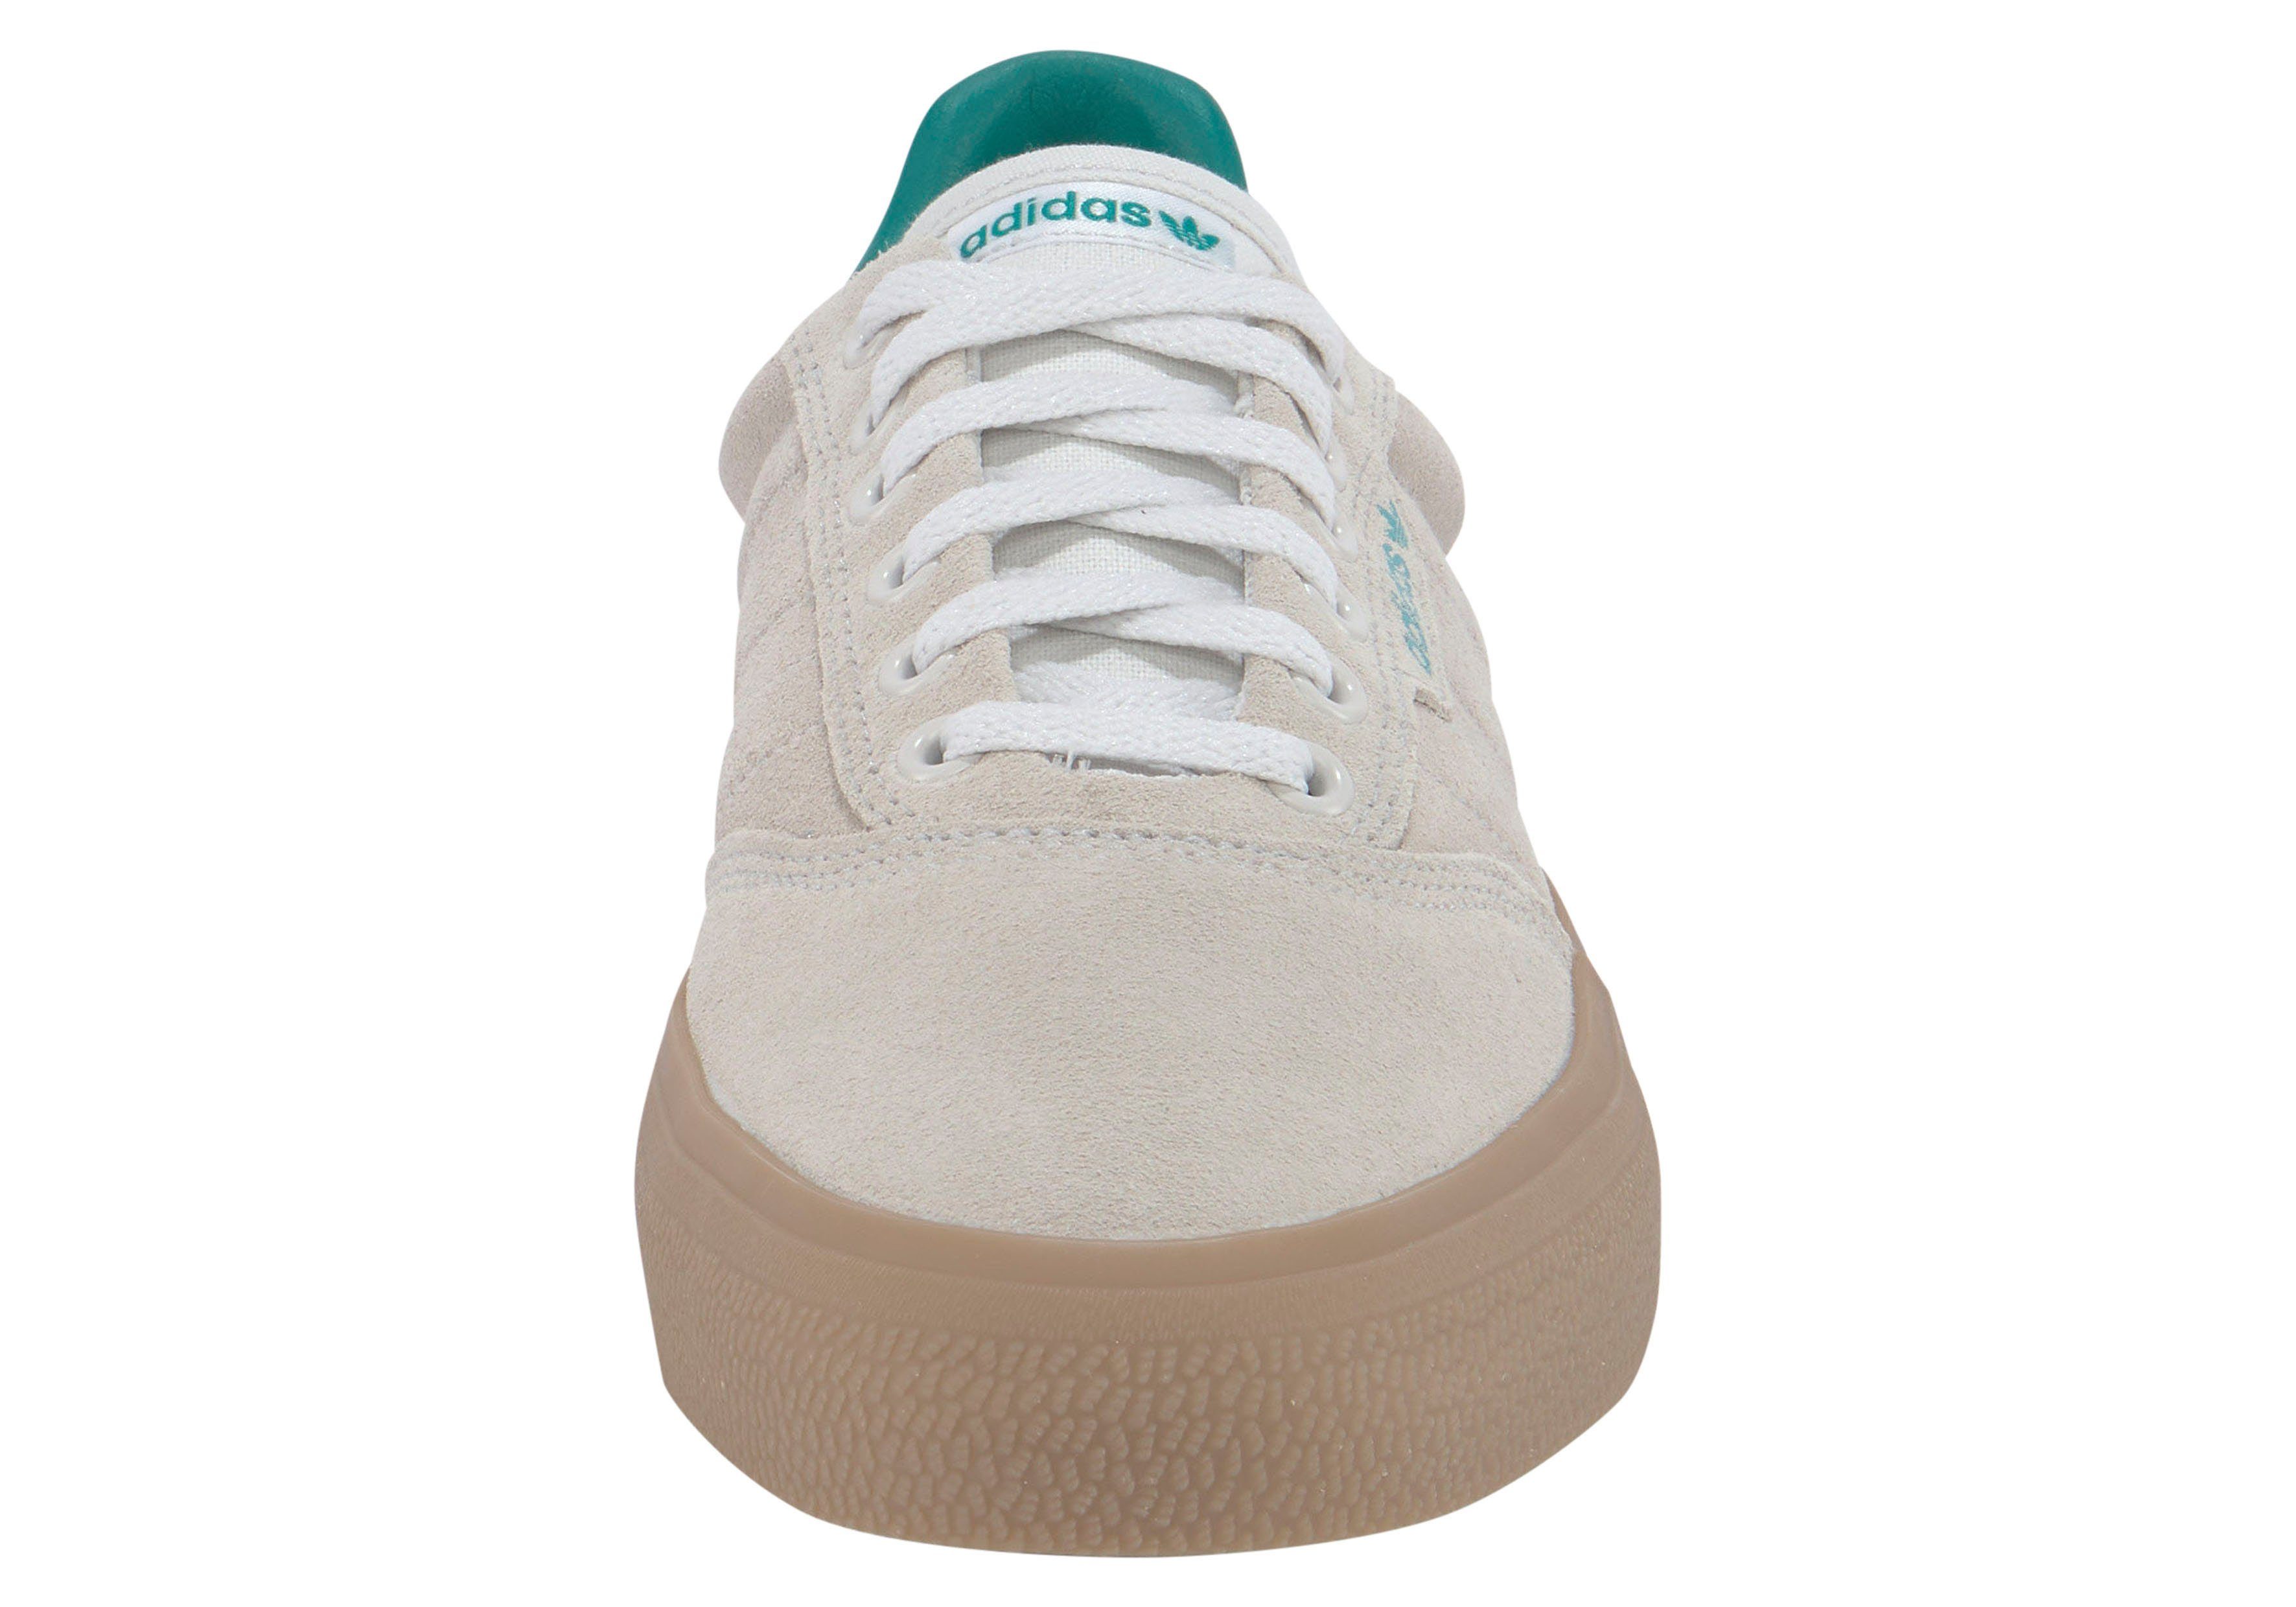 Green Originals White / Sneaker Chalk / adidas Gum4 3MC Glory